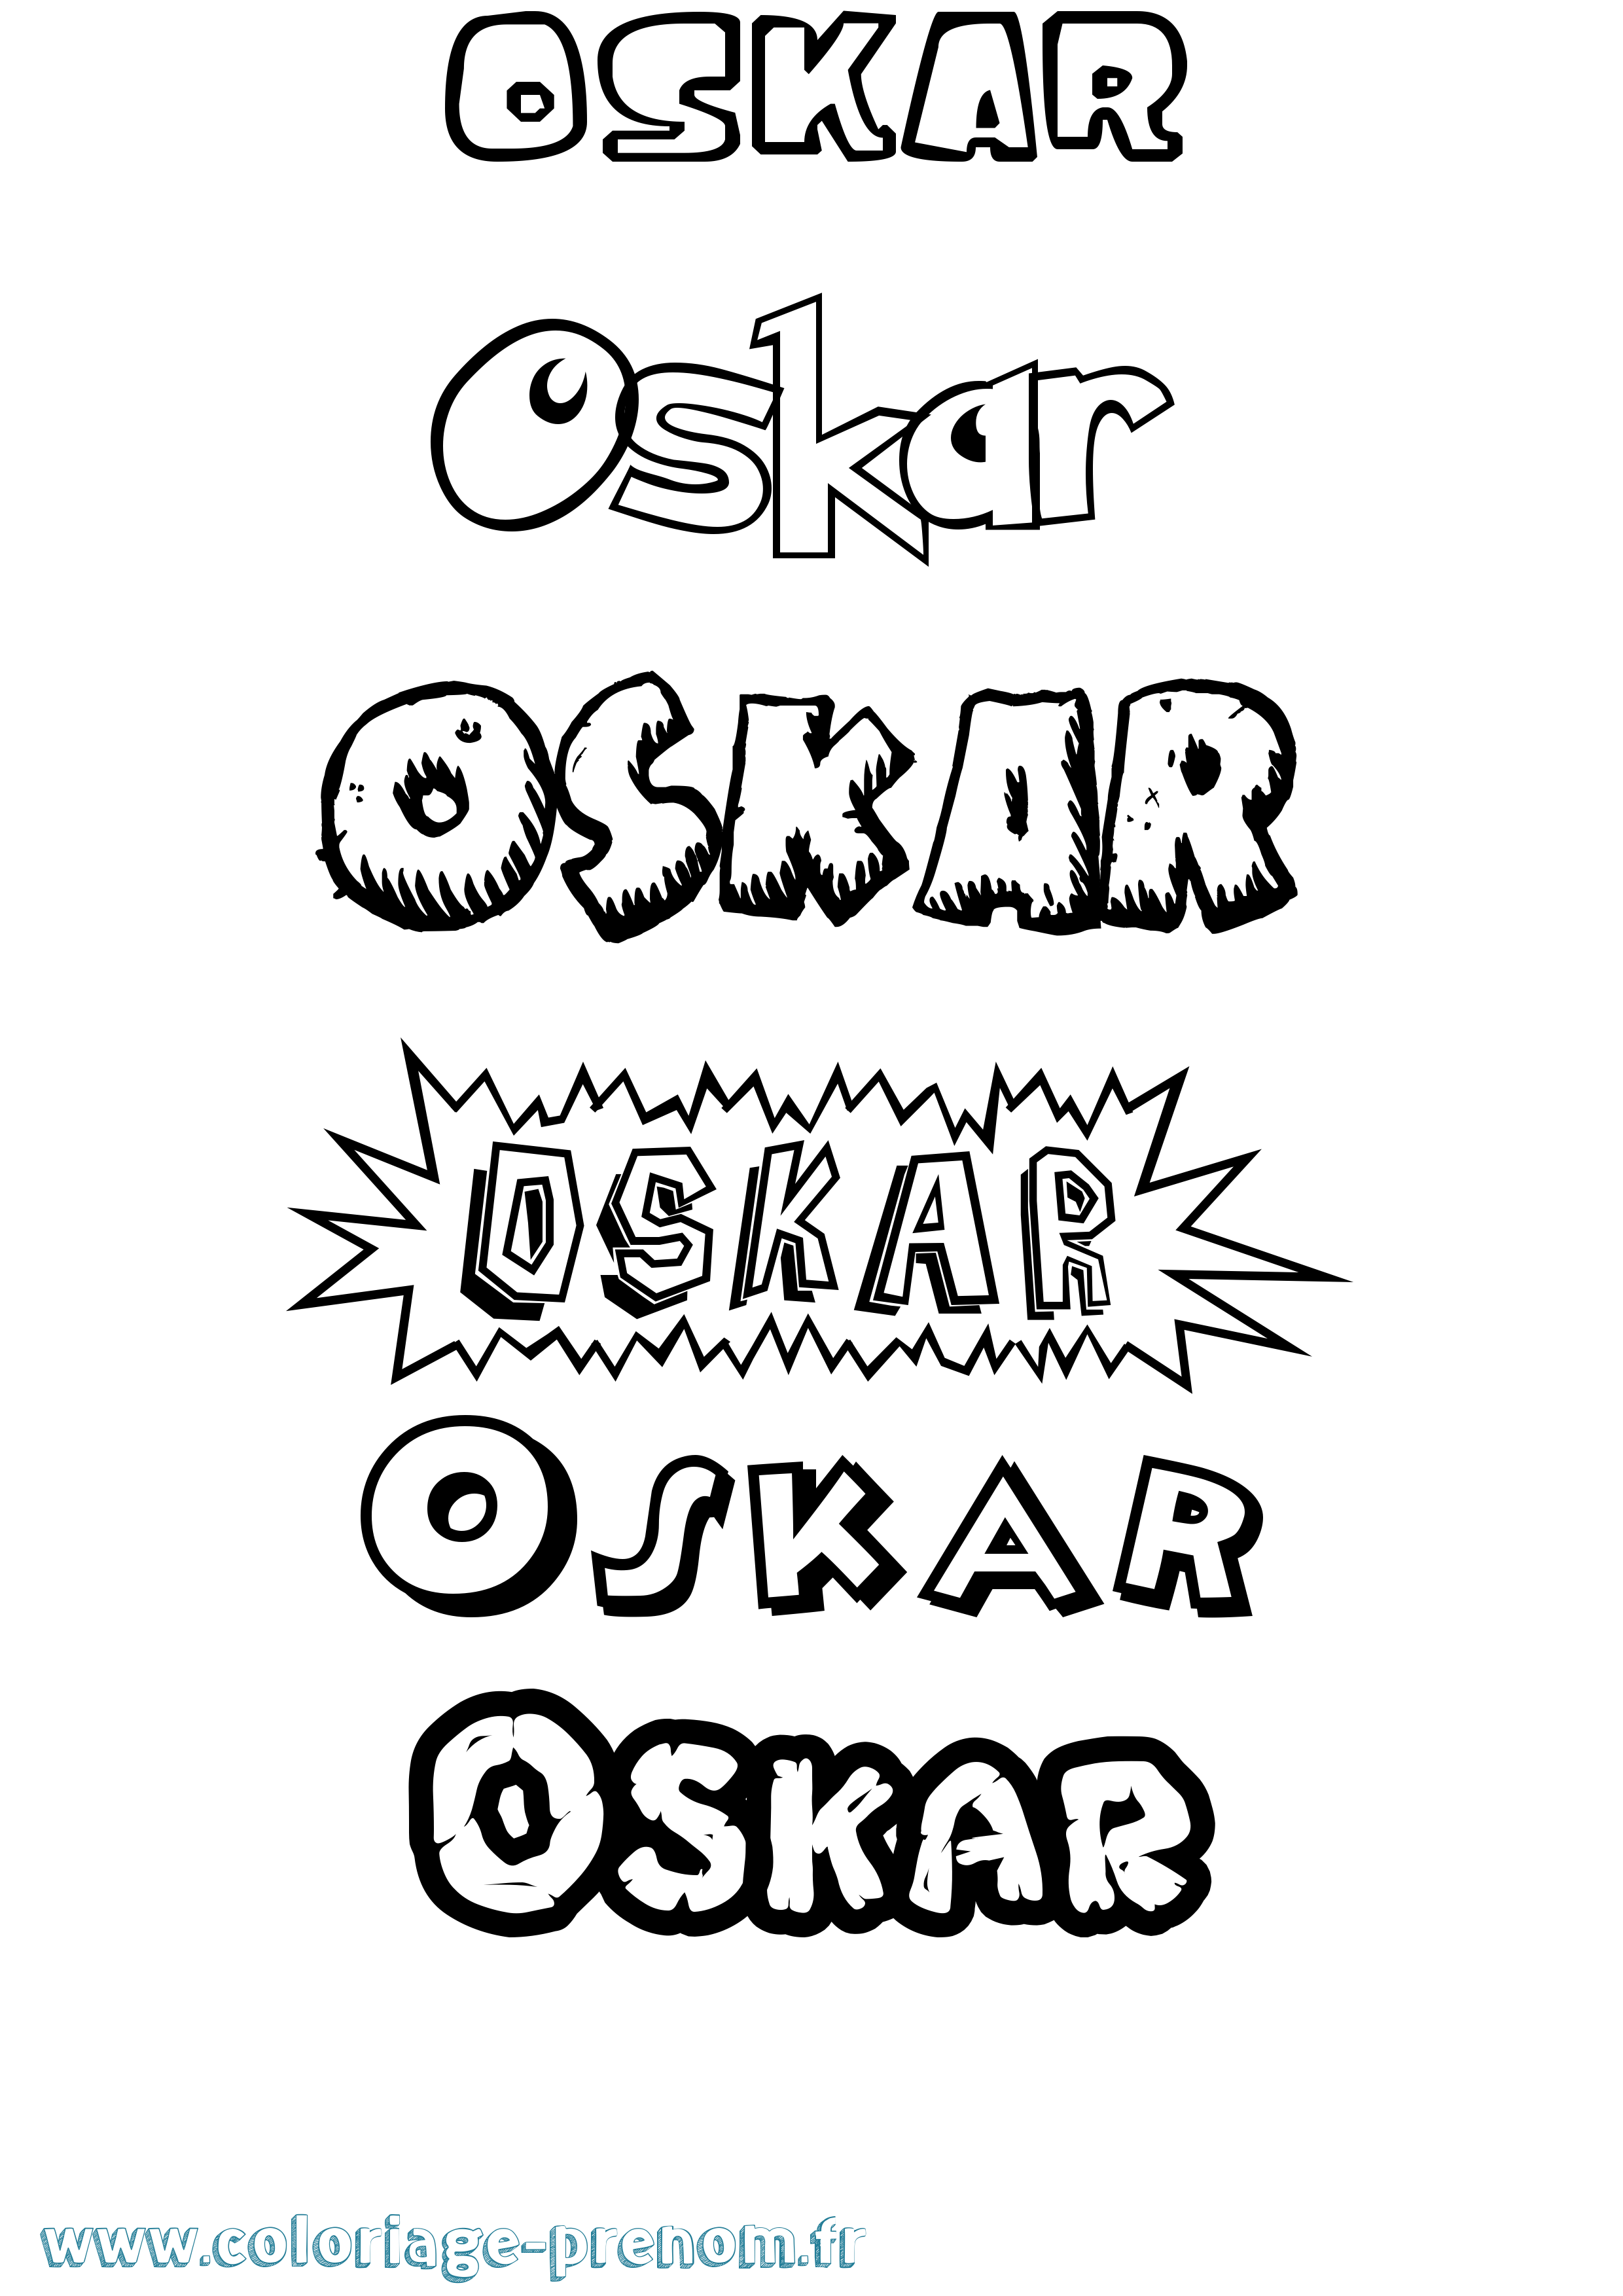 Coloriage prénom Oskar